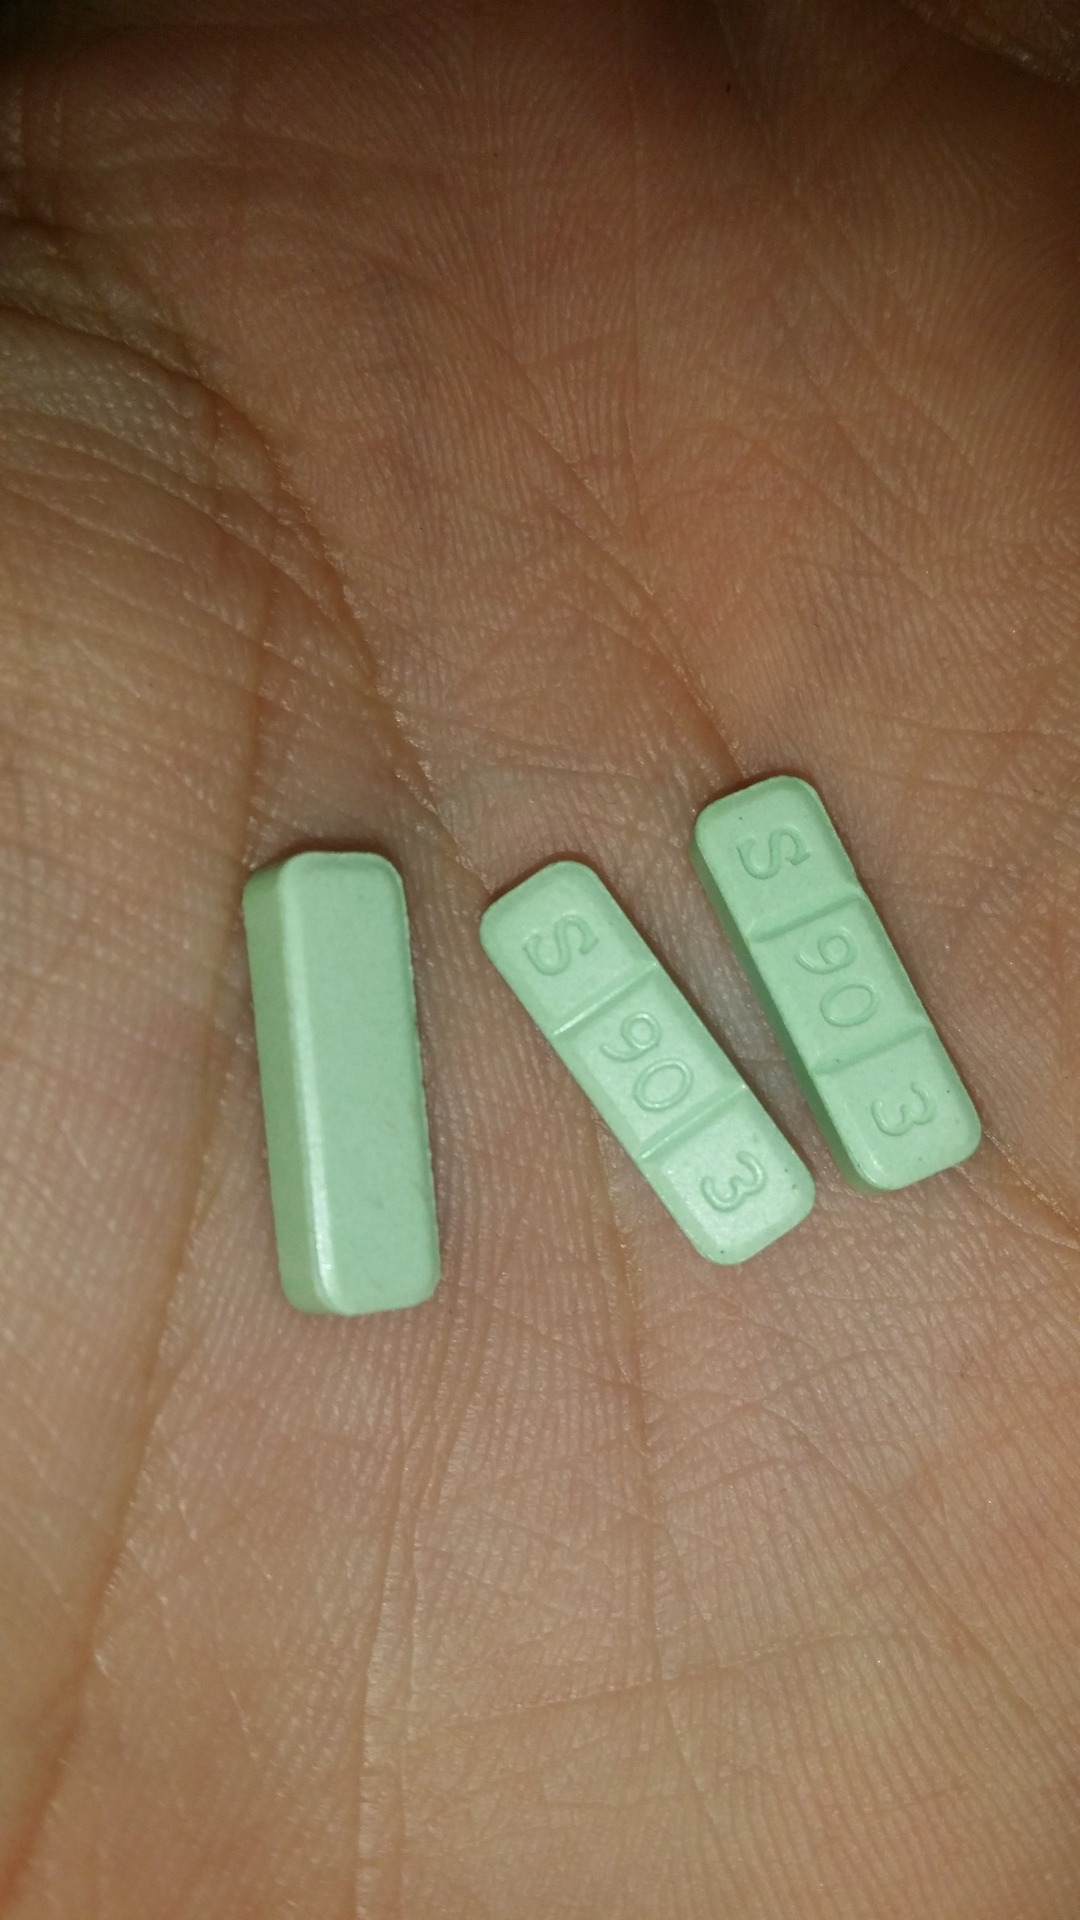 Pressed green xanax bars s903 fake pills